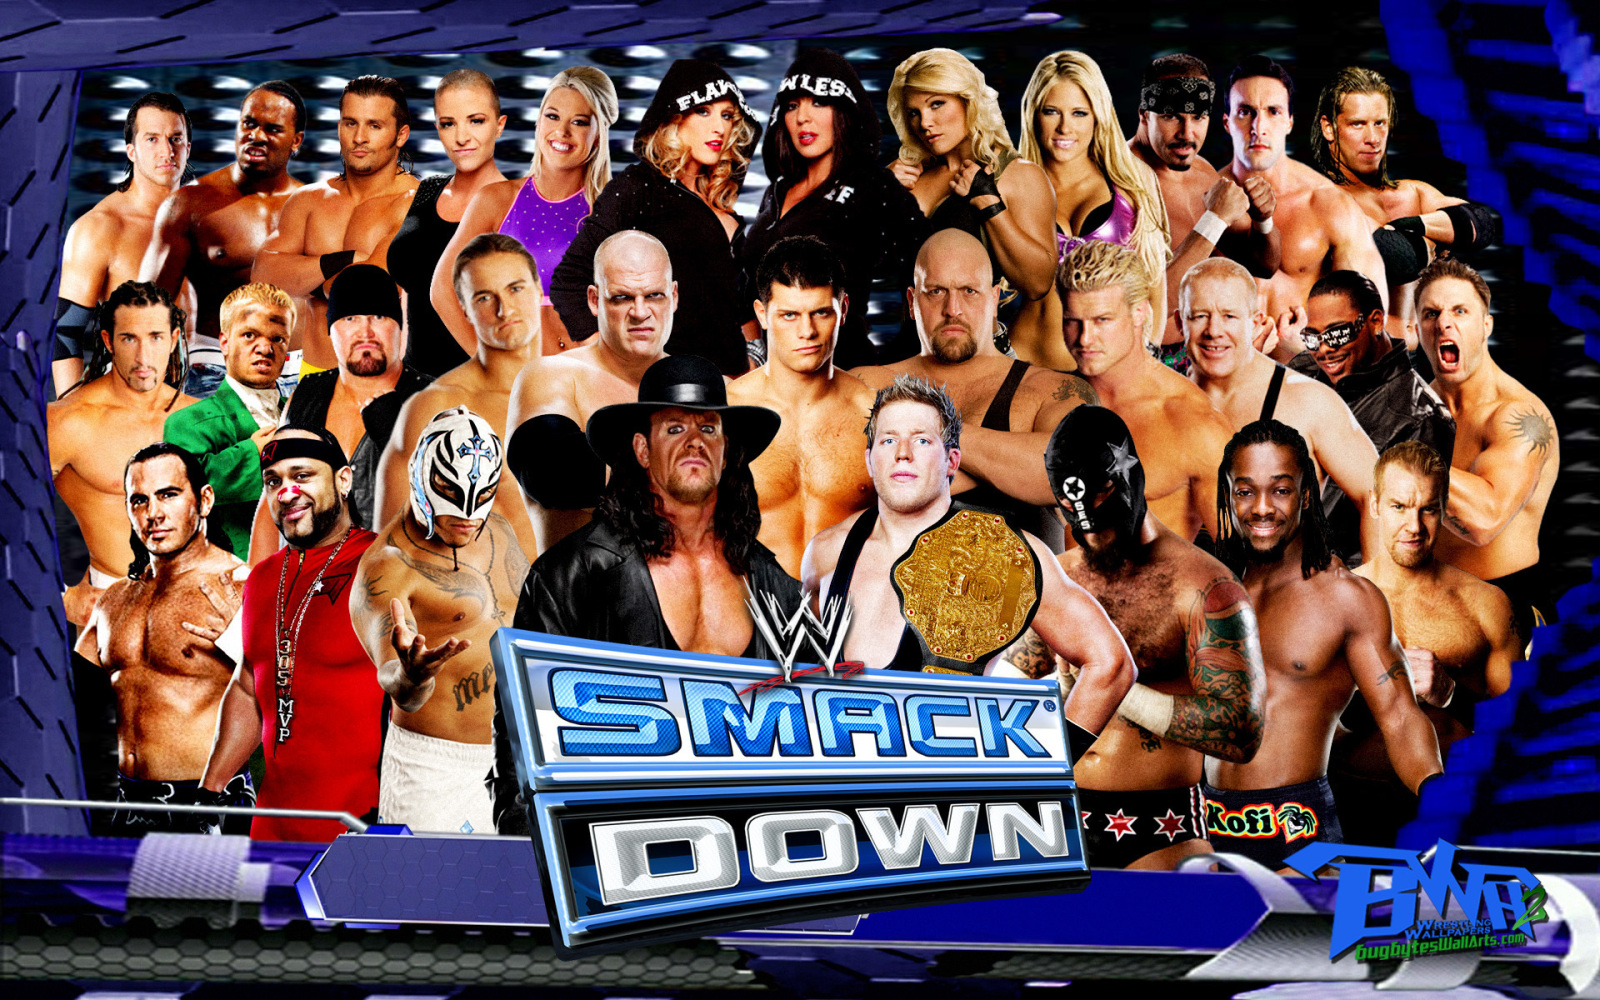   Wwe Smackdown Vs Raw 2013     -  2